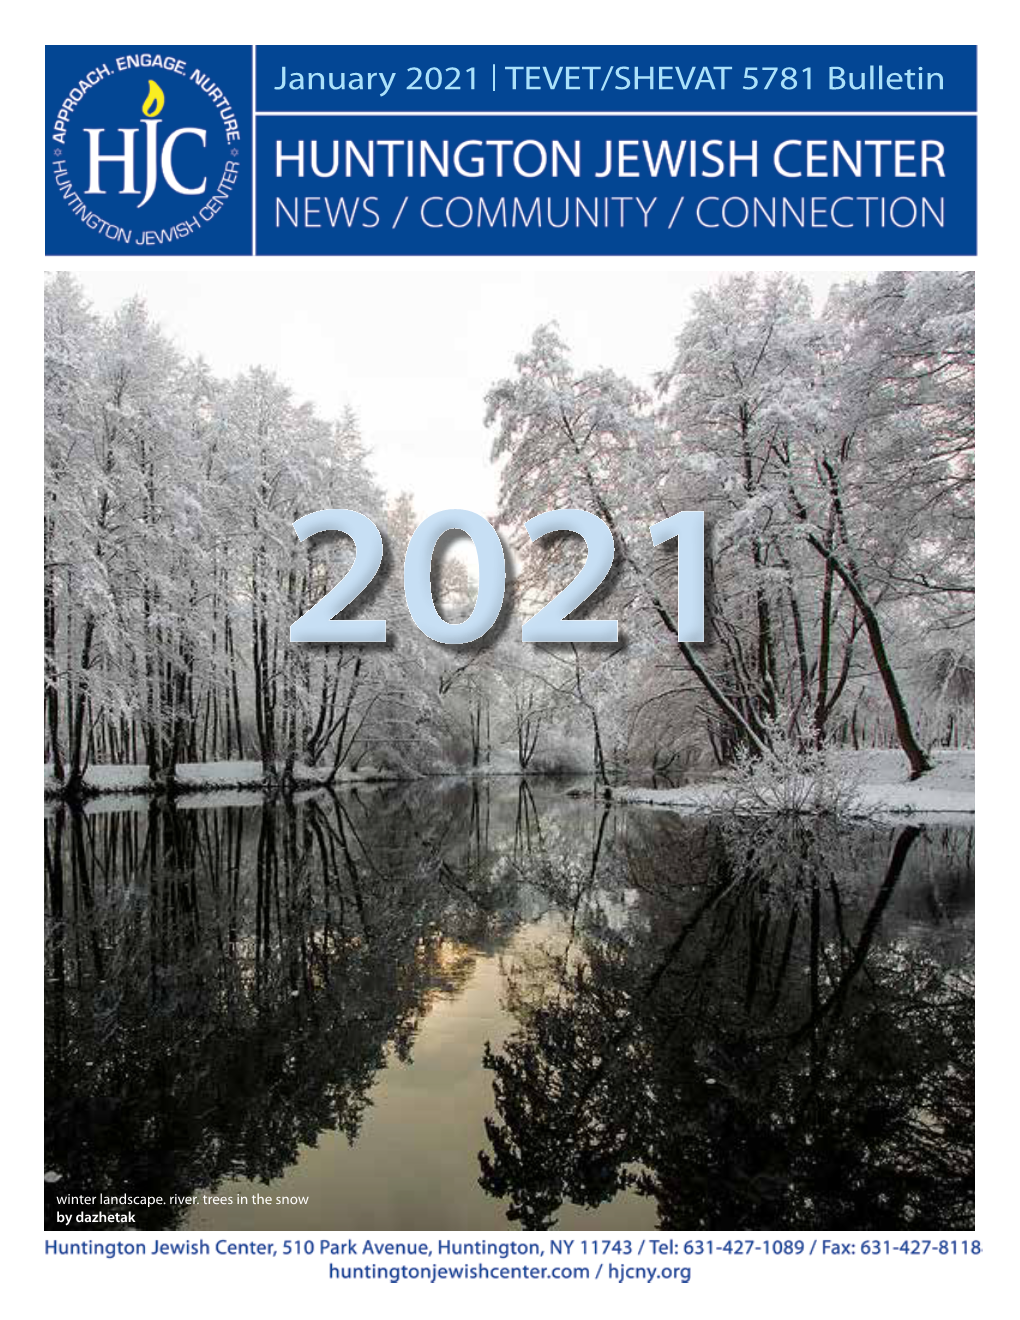 HJC Bulletin, Jan 2021